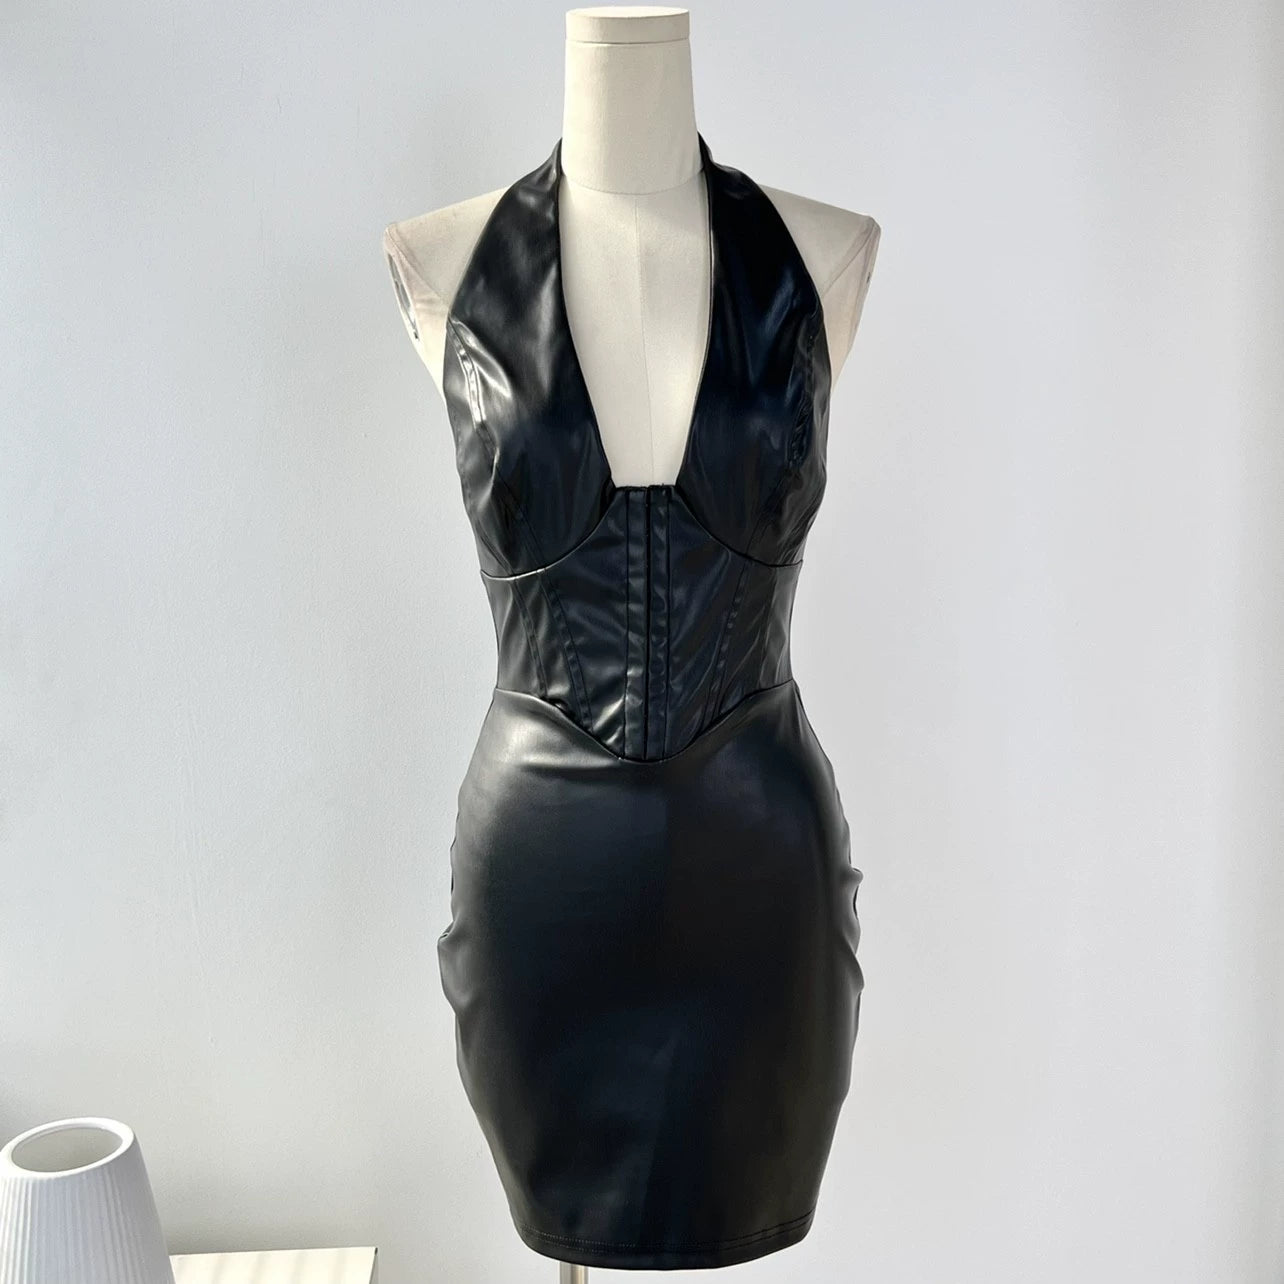 Seductive Deep V-neck PU Leather Dress: Versatile Fashion Statement